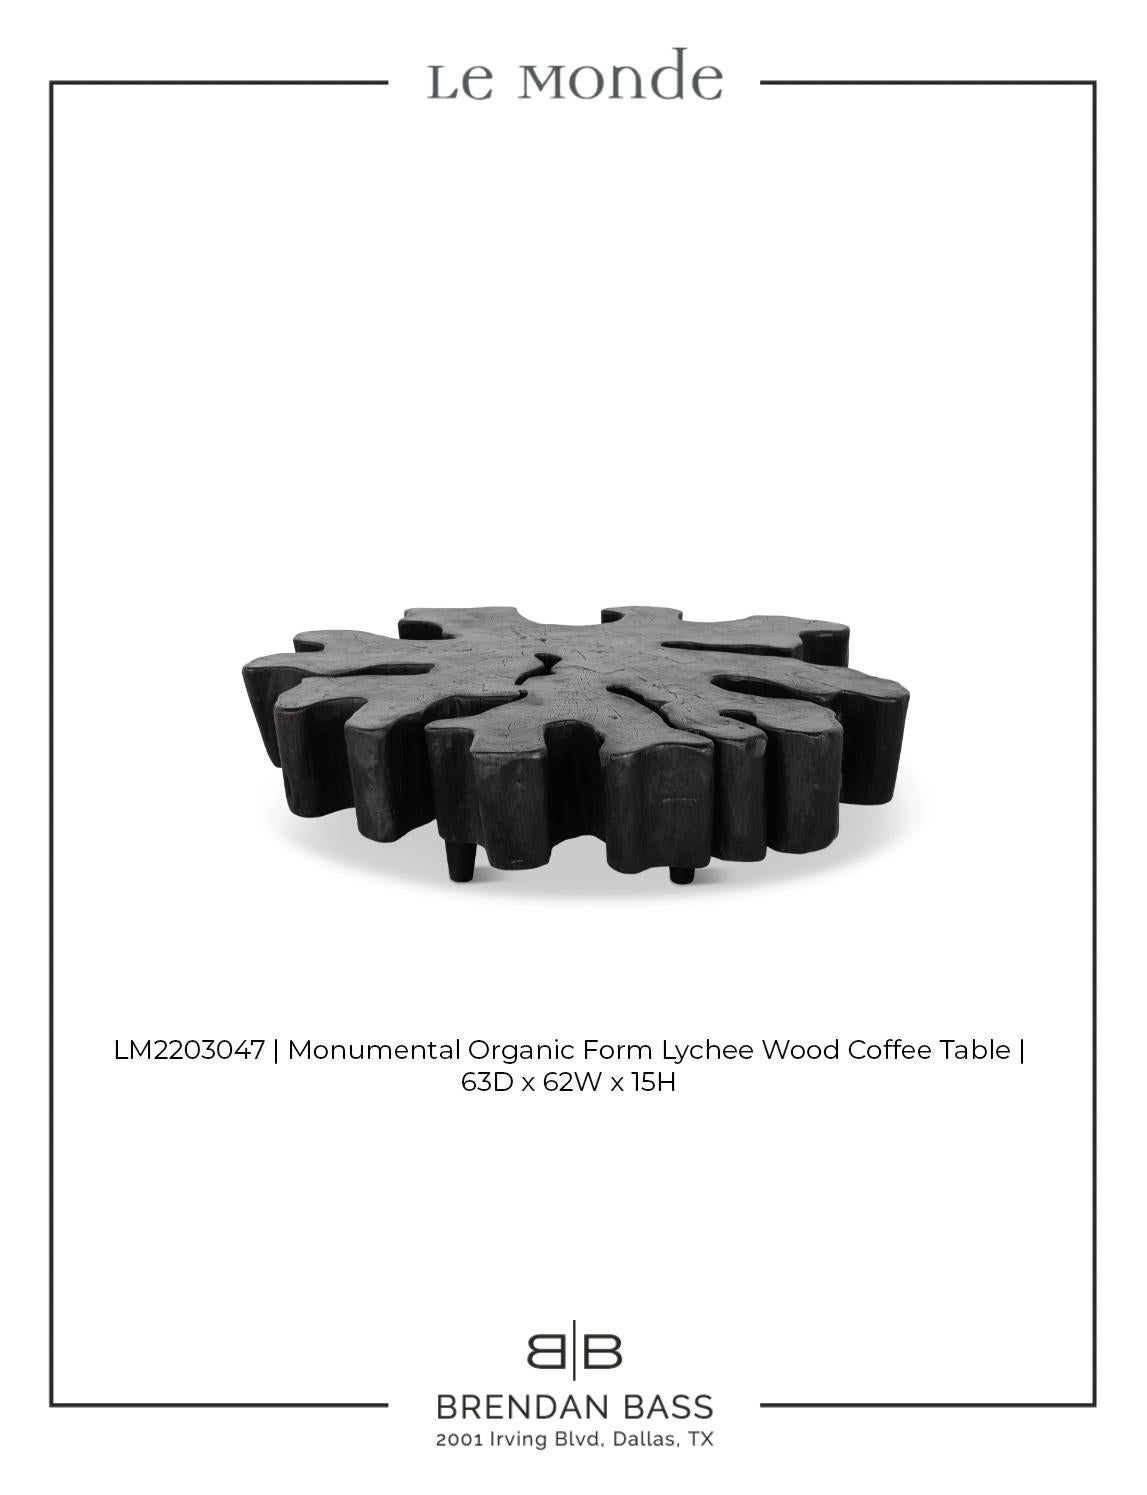 Monumental Organic Form Lychee Wood Coffee Table 7